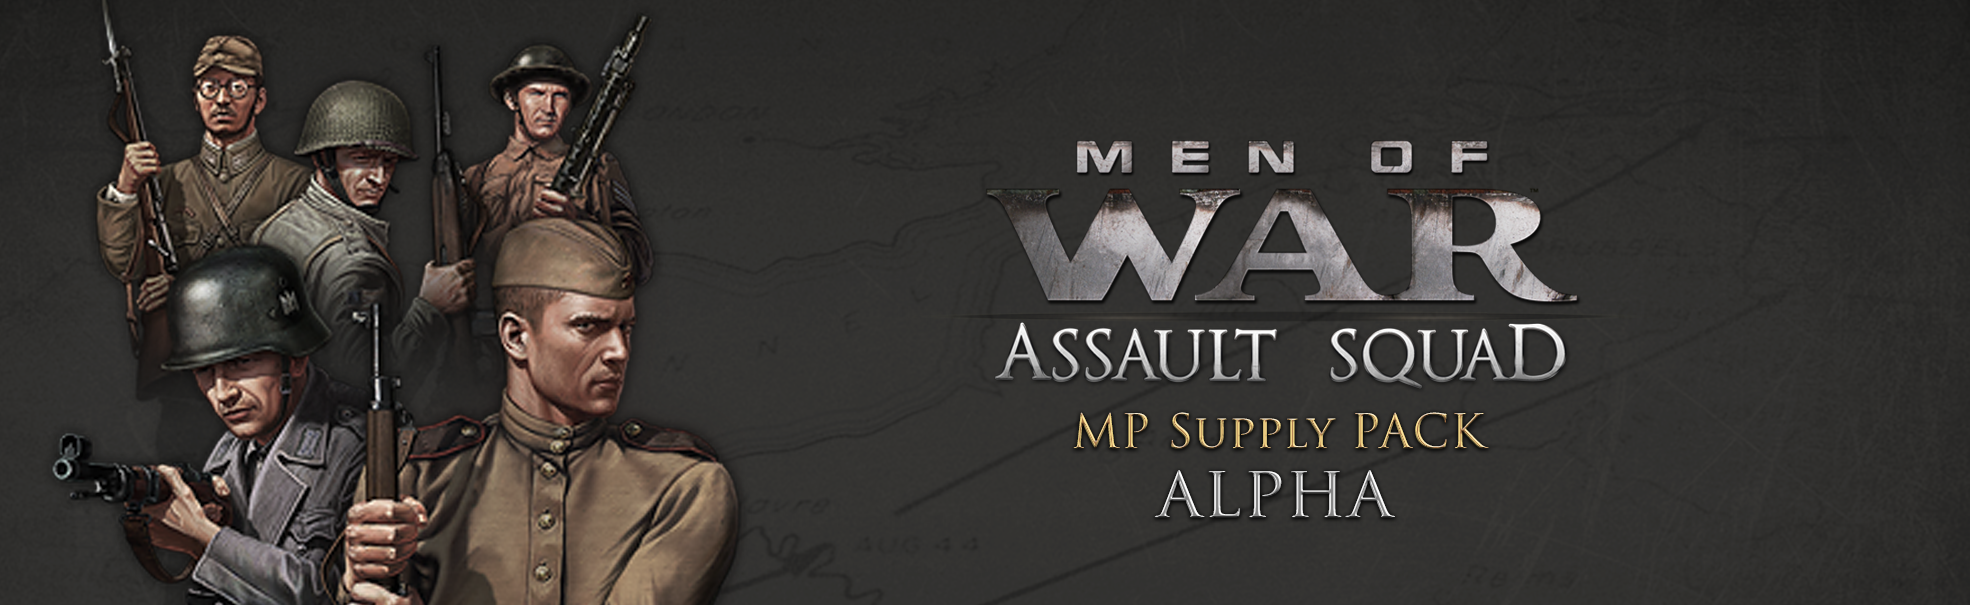 Men of War: Assault Squad - MP supply pack Alpha